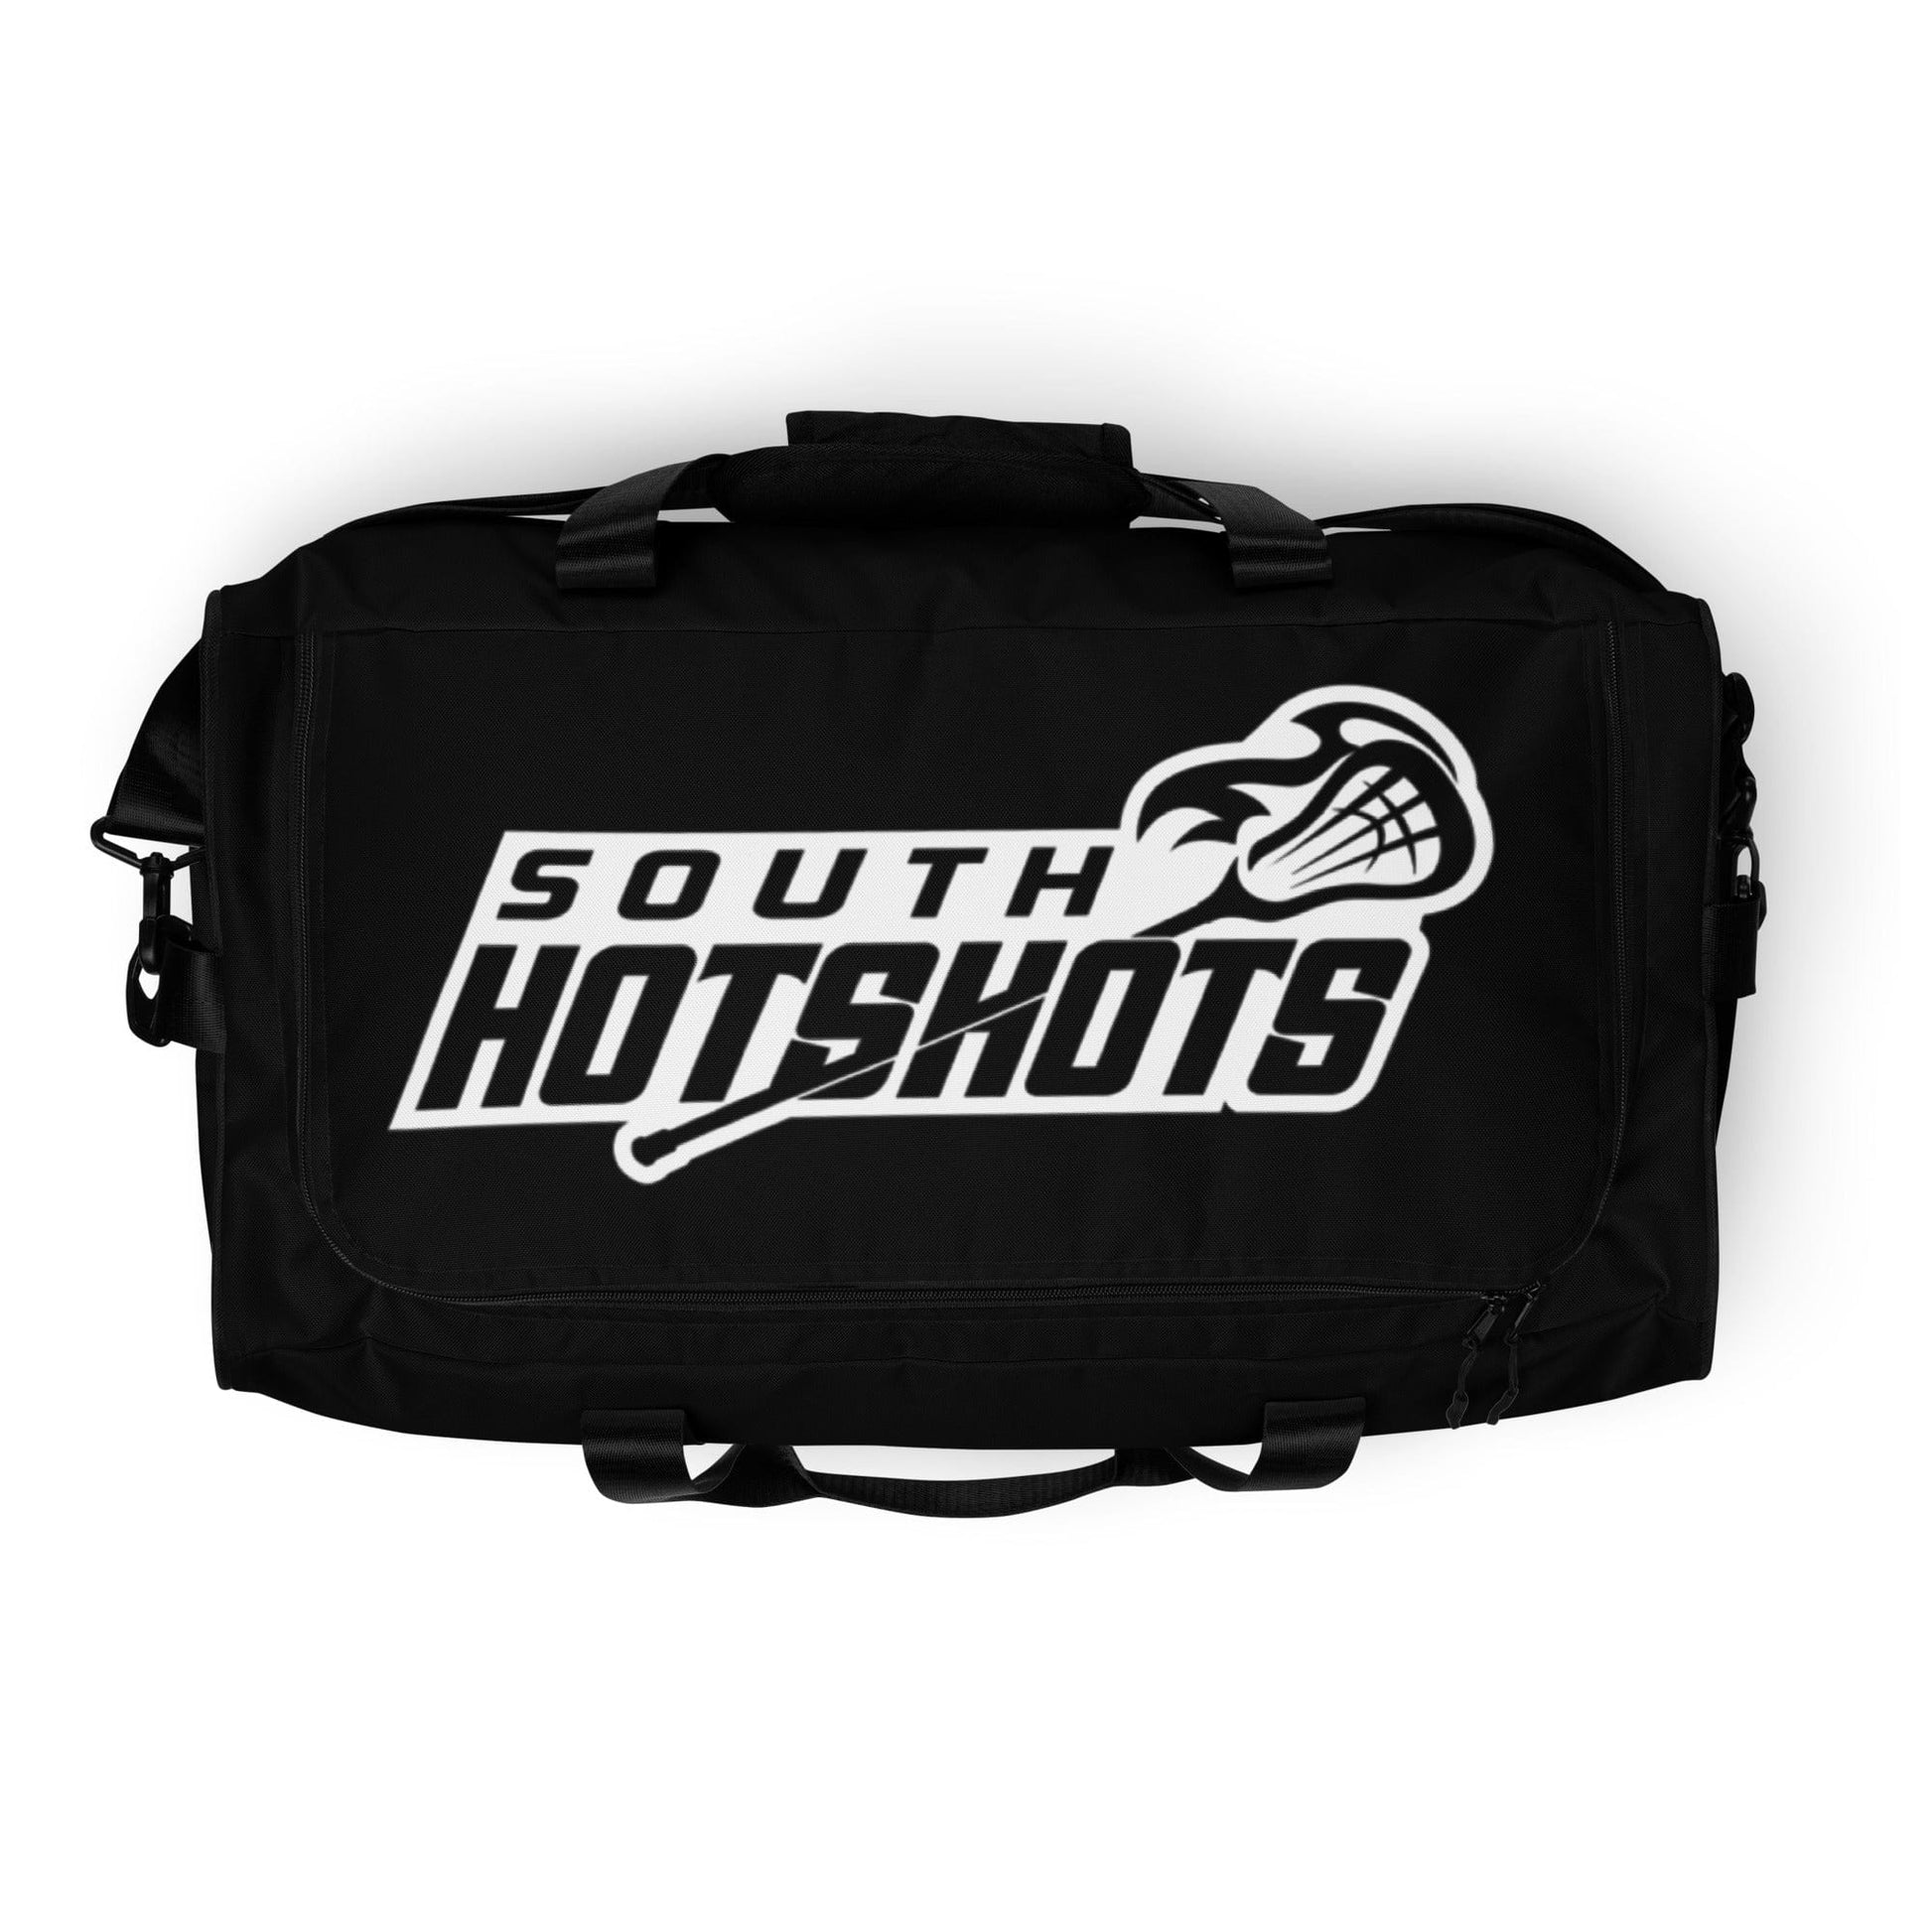 South Hotshots Lacrosse Sideline Bag Signature Lacrosse